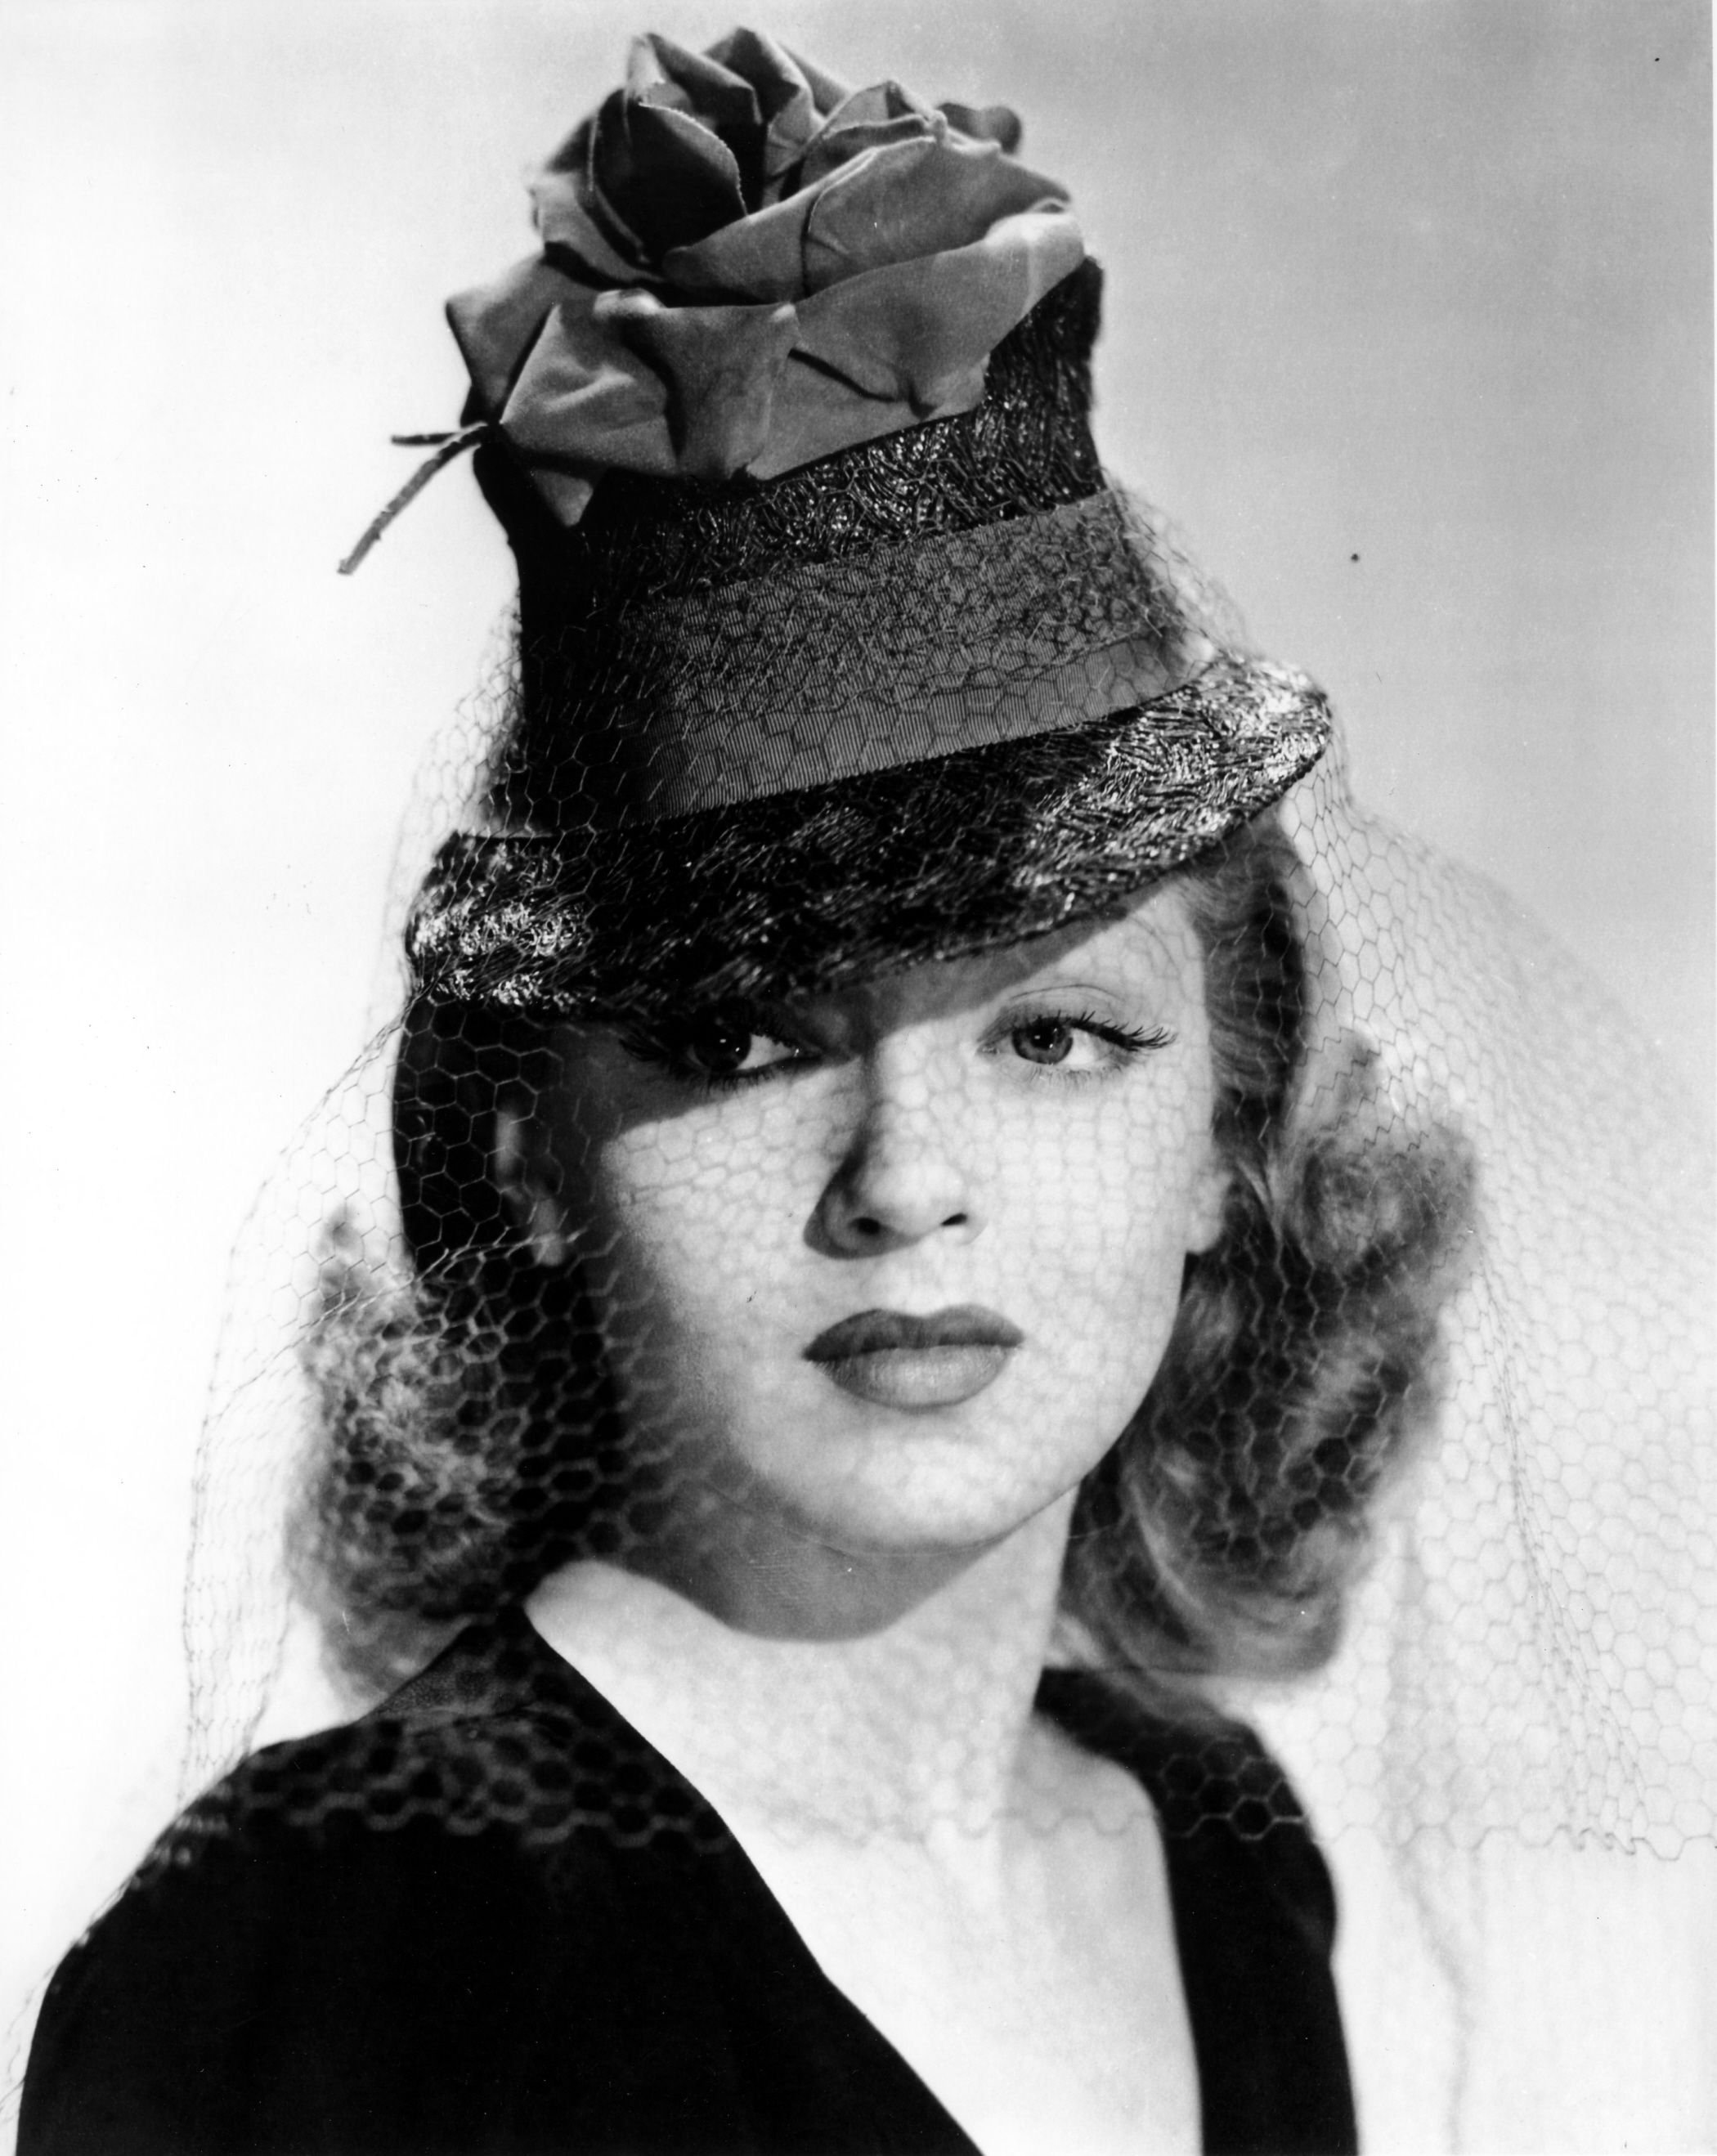 Шляпки мода 30х. Шляпки 1940х Америка голливудские. Мода шляпок Германия 40е. Шляпы 50 годов